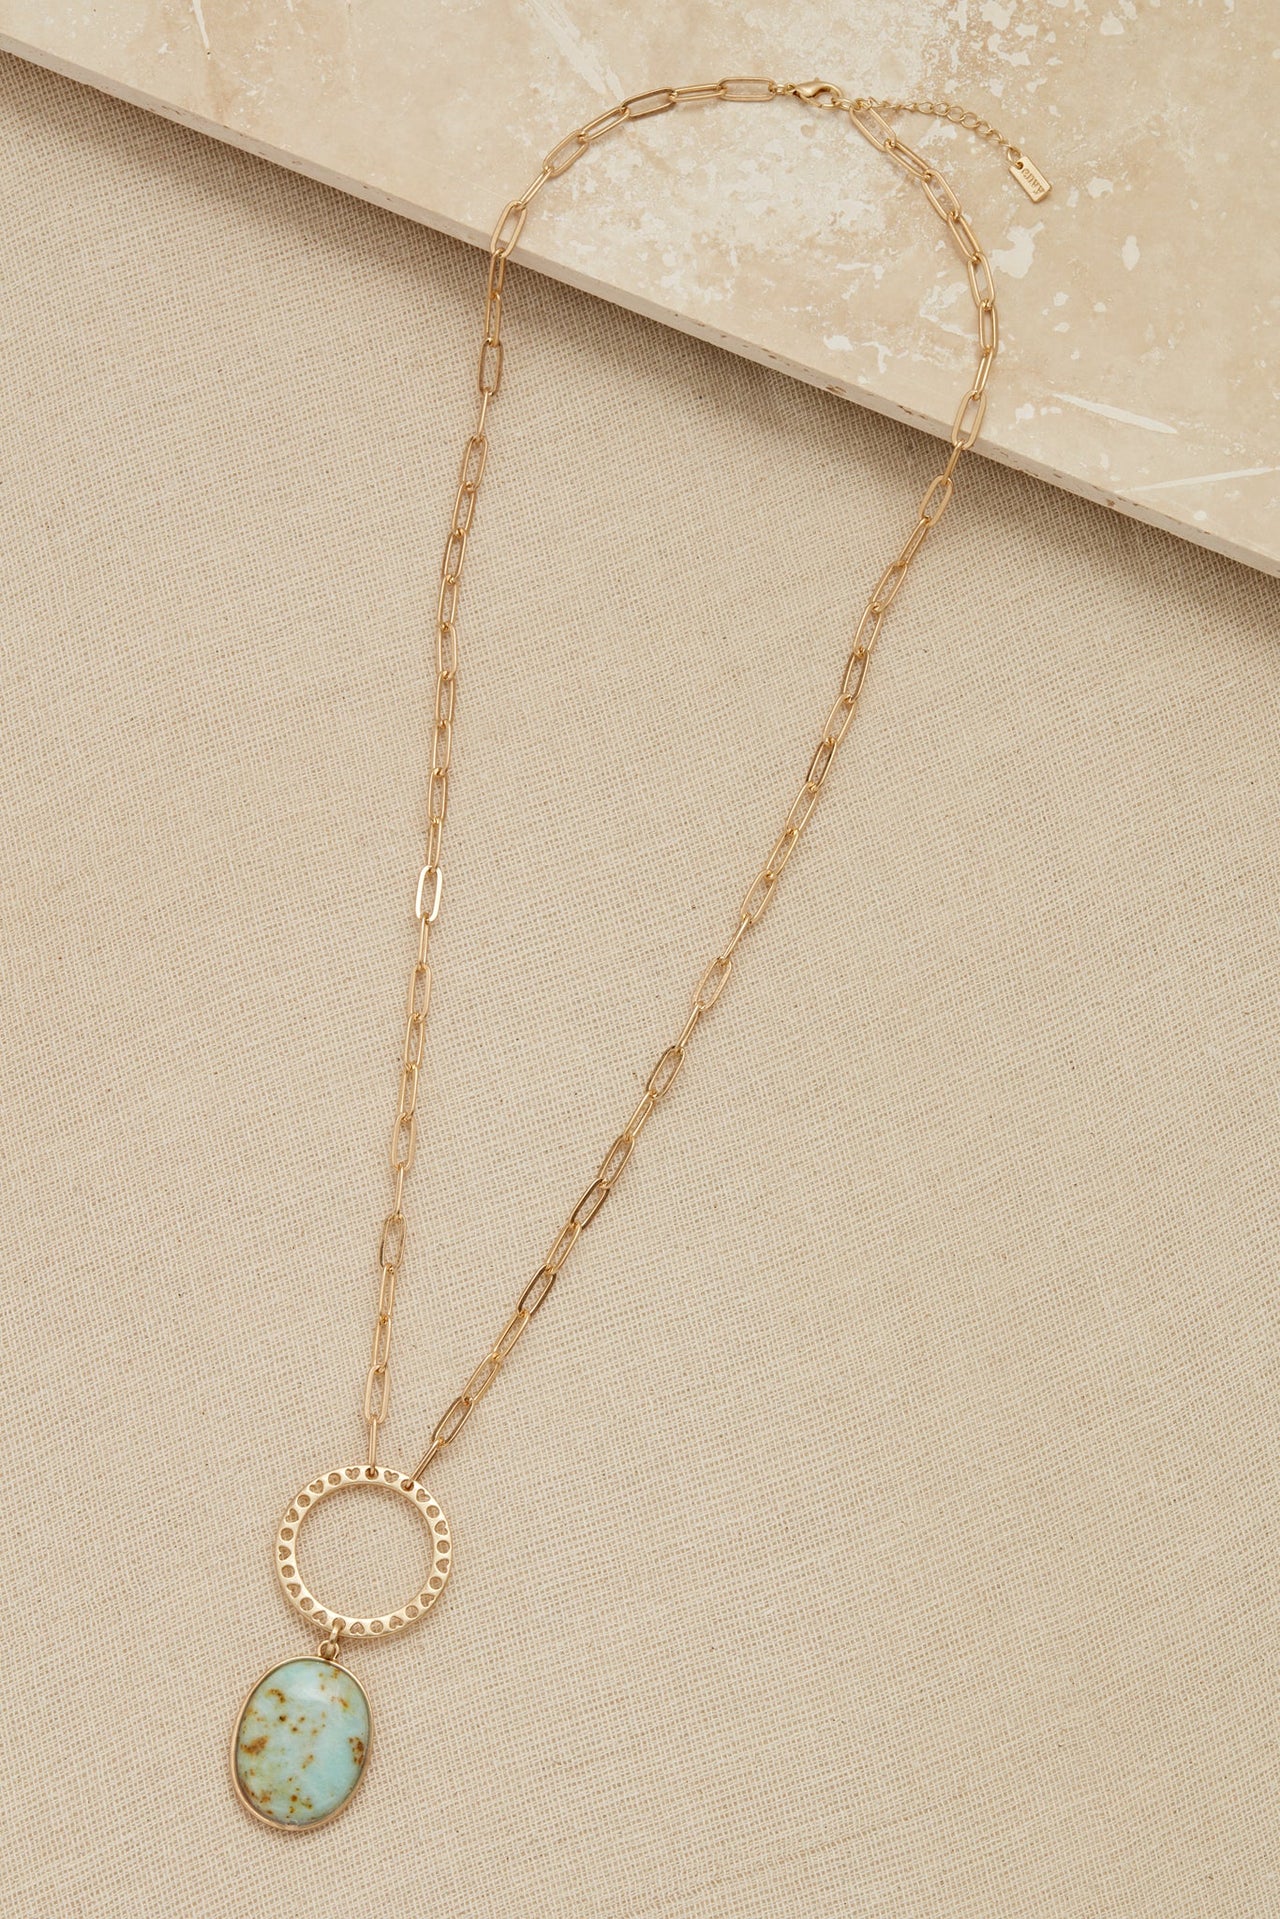 Envy Long Gold Oval Pendant Necklace